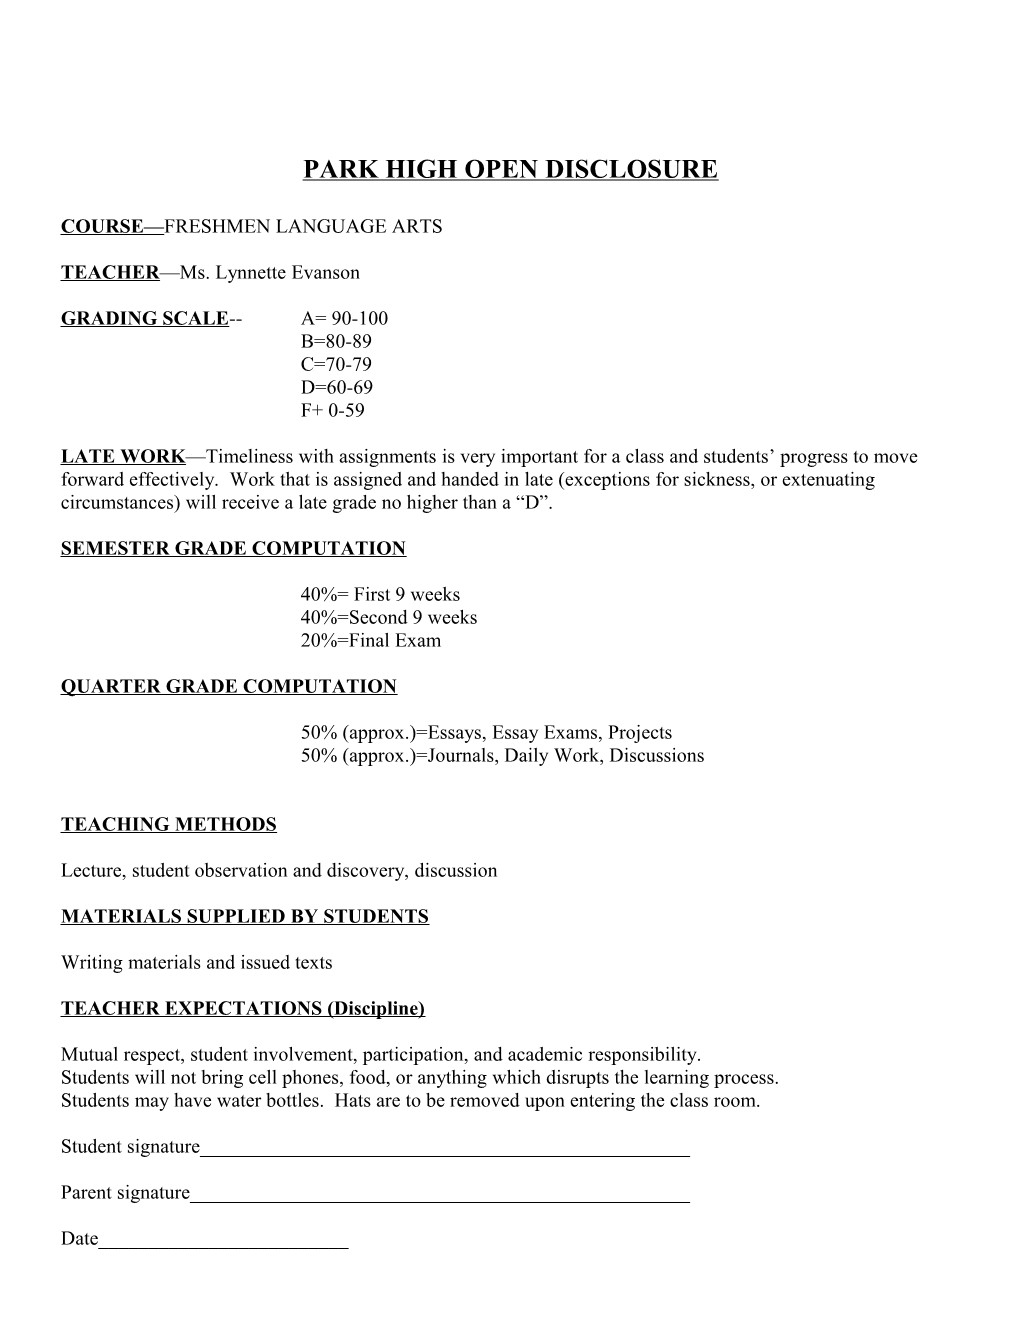 Park High Open Disclosure